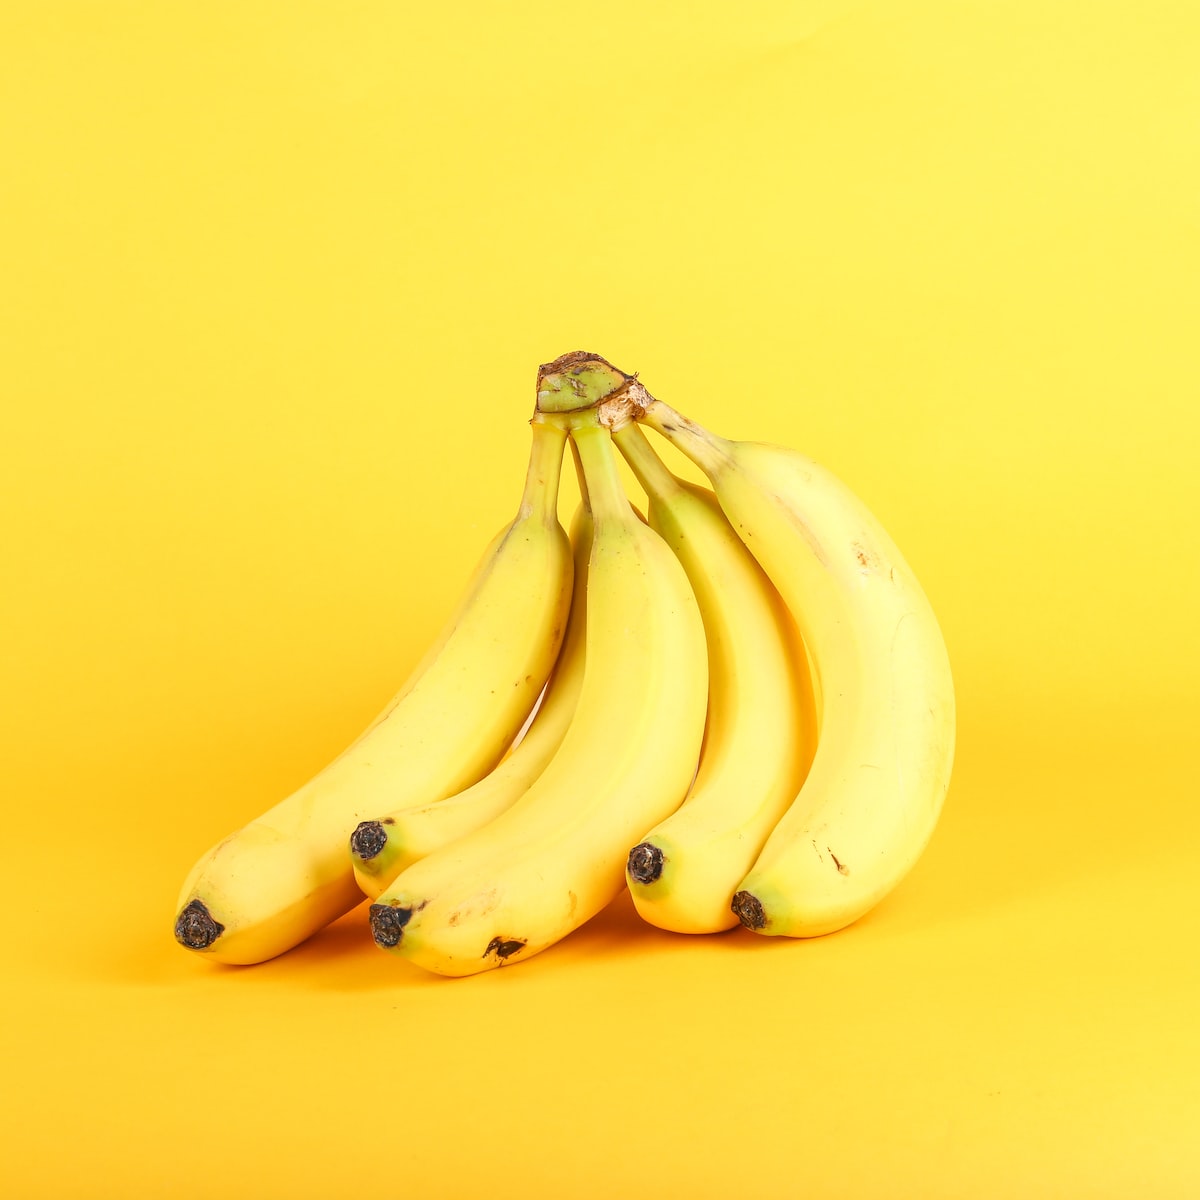 Bananas on yellow background